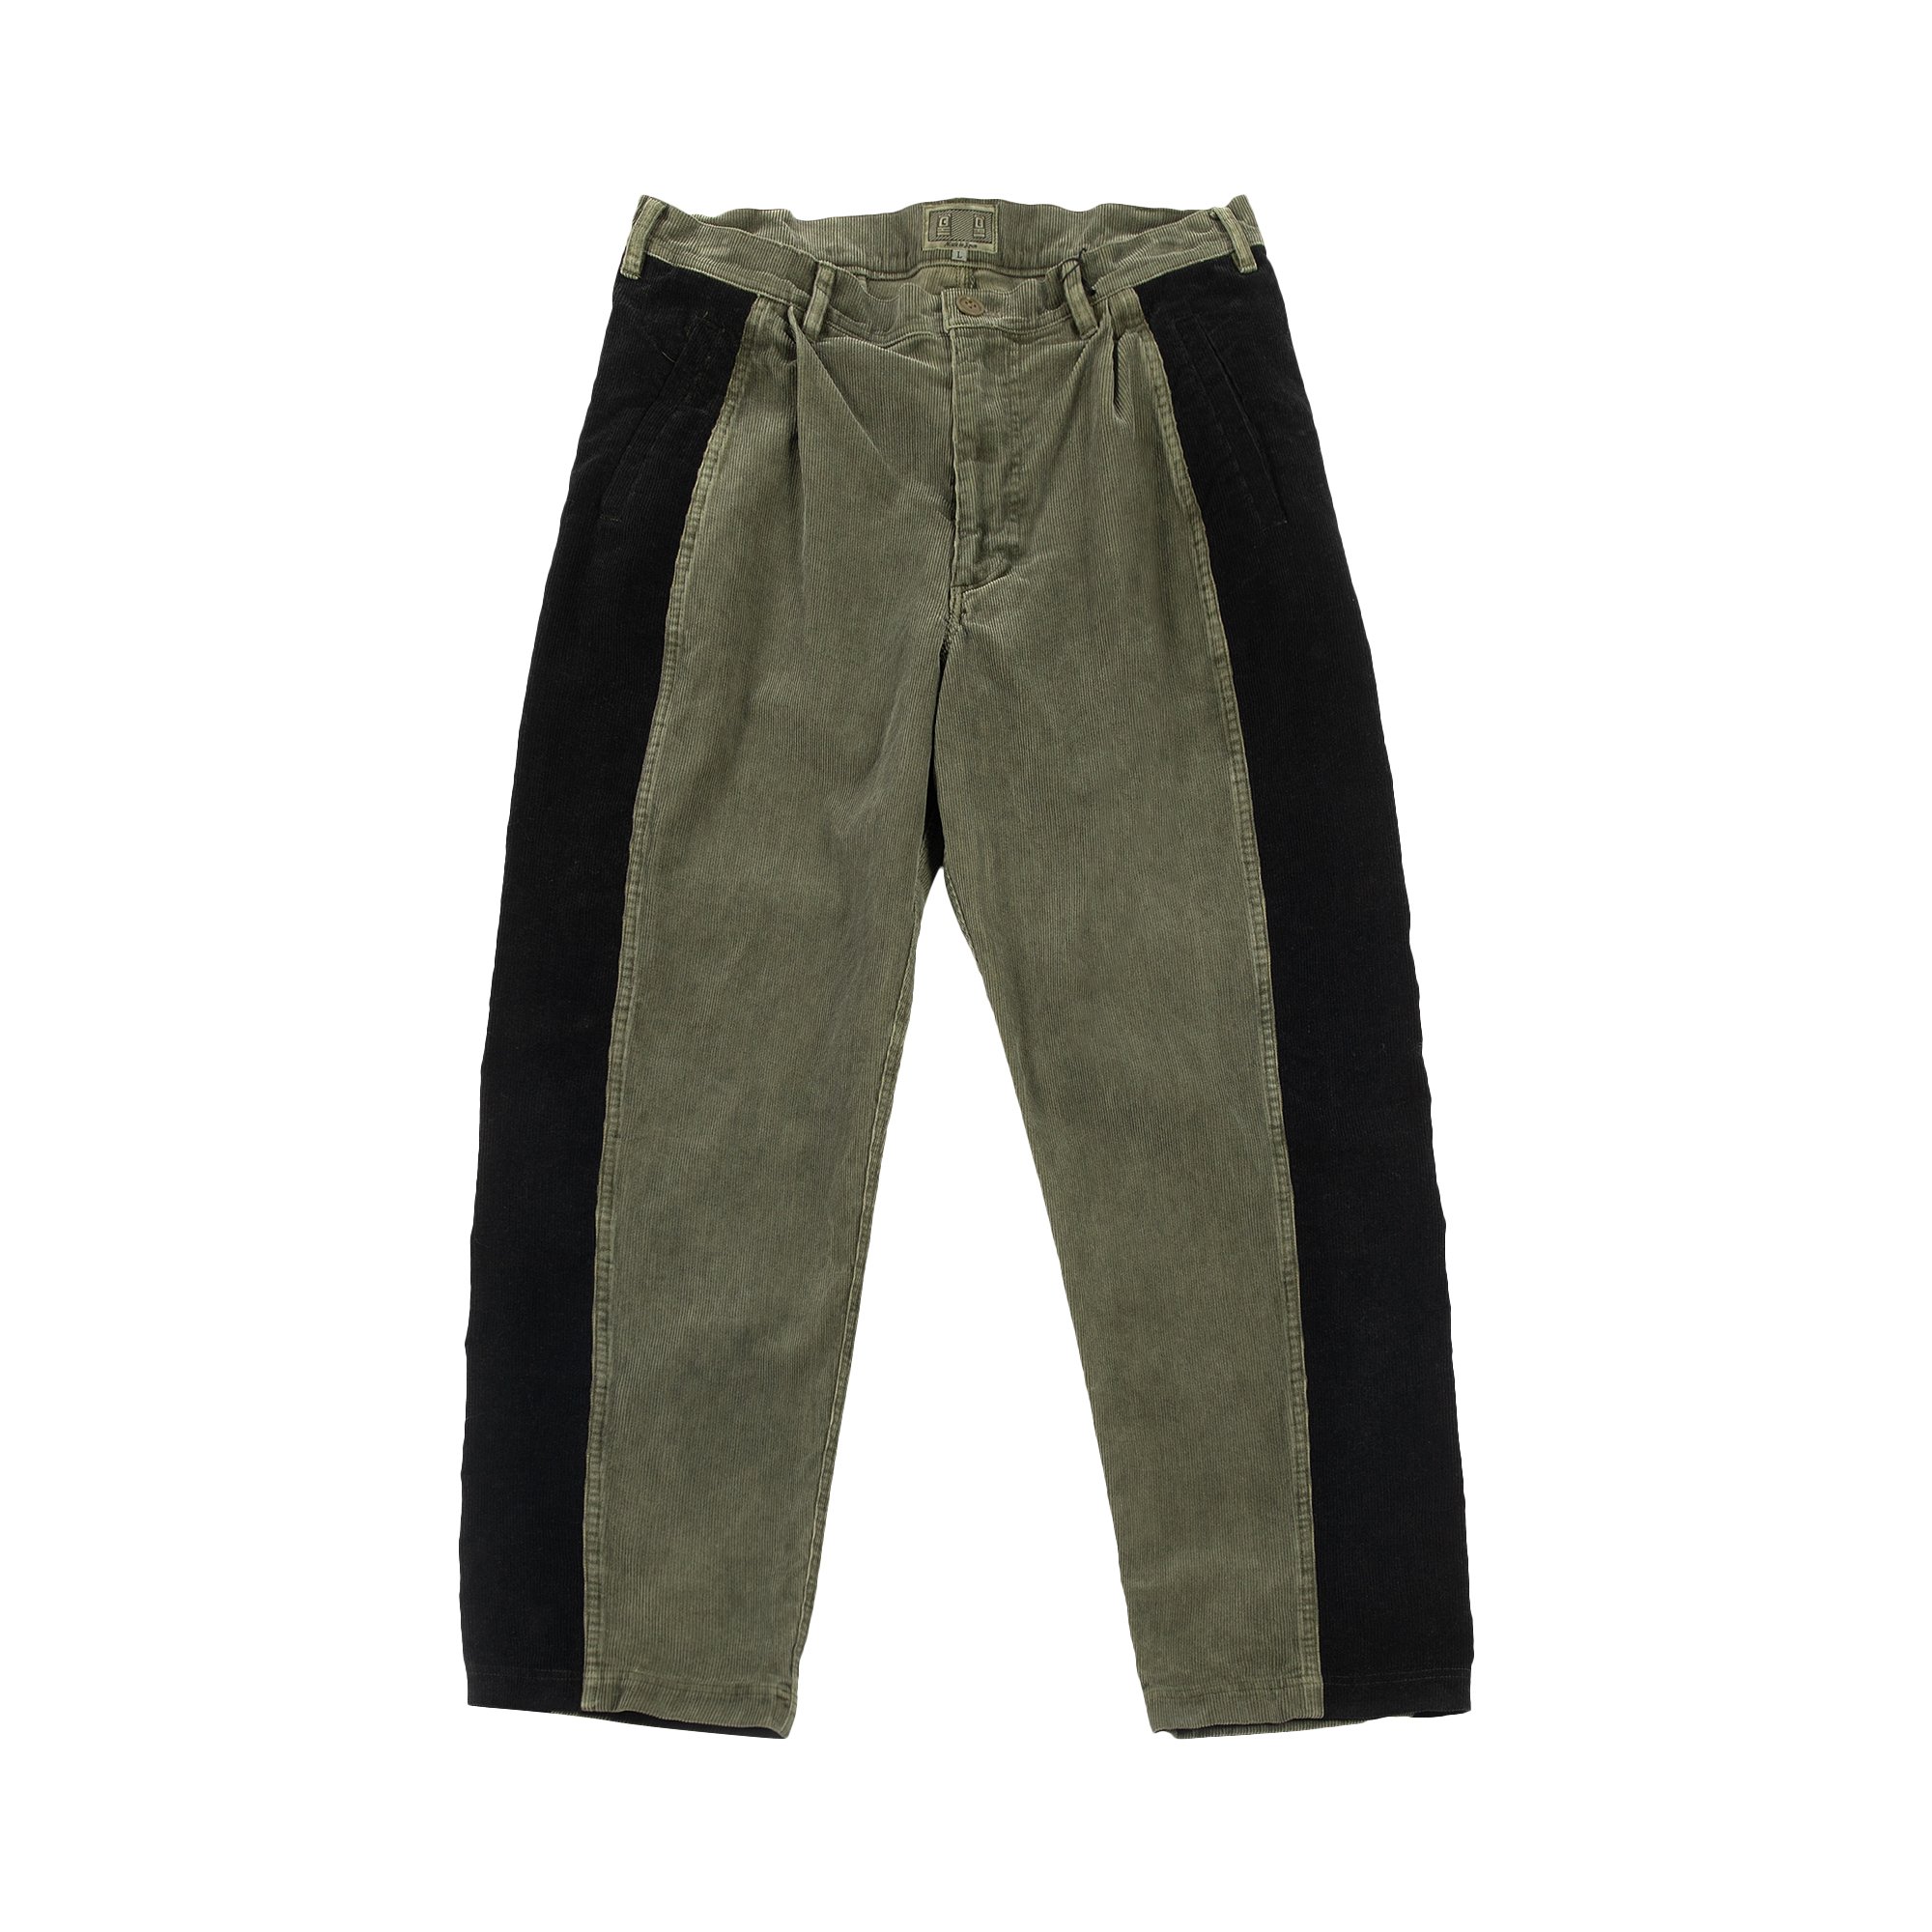 VBXOAE Mens Corduroy Pants Fall Winter Classic-Fit Casual Chino Pants Army  Green L 